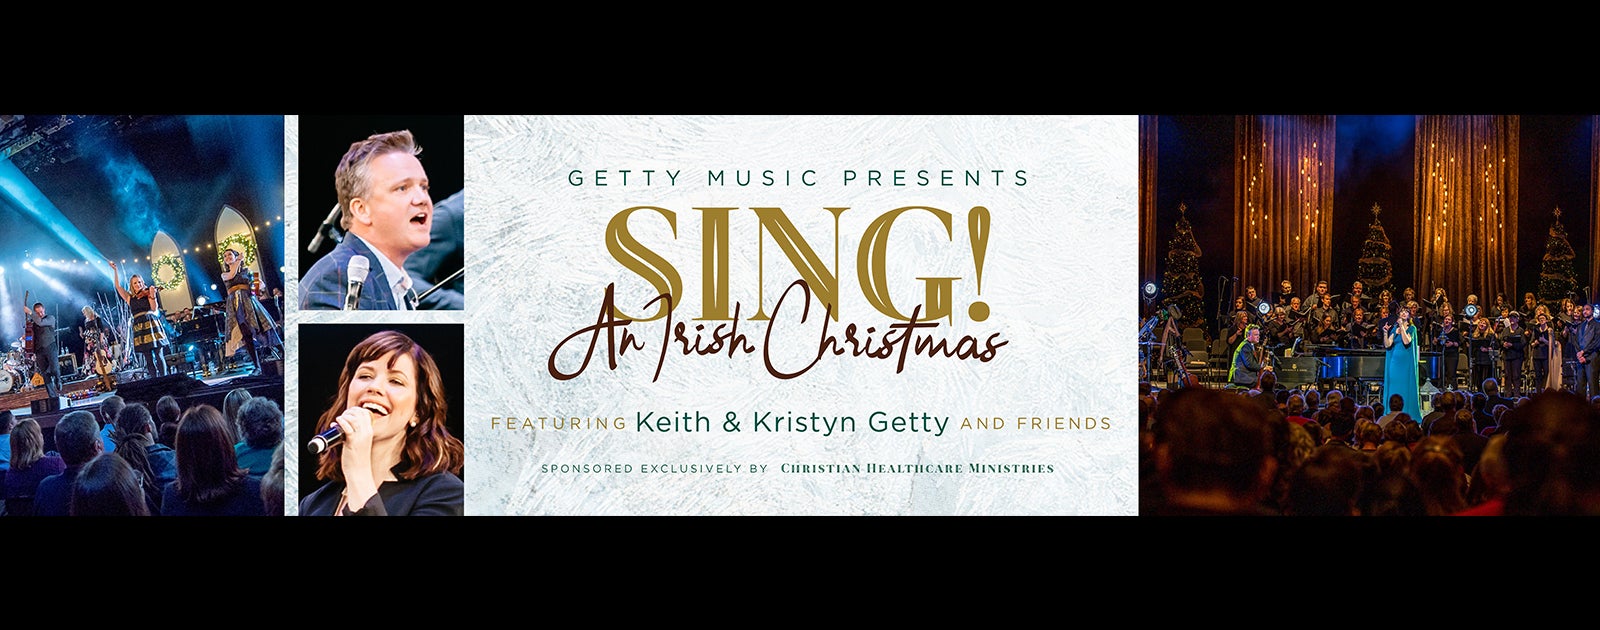 Sing! An Irish Christmas with Keith & Kristyn Getty & Friends